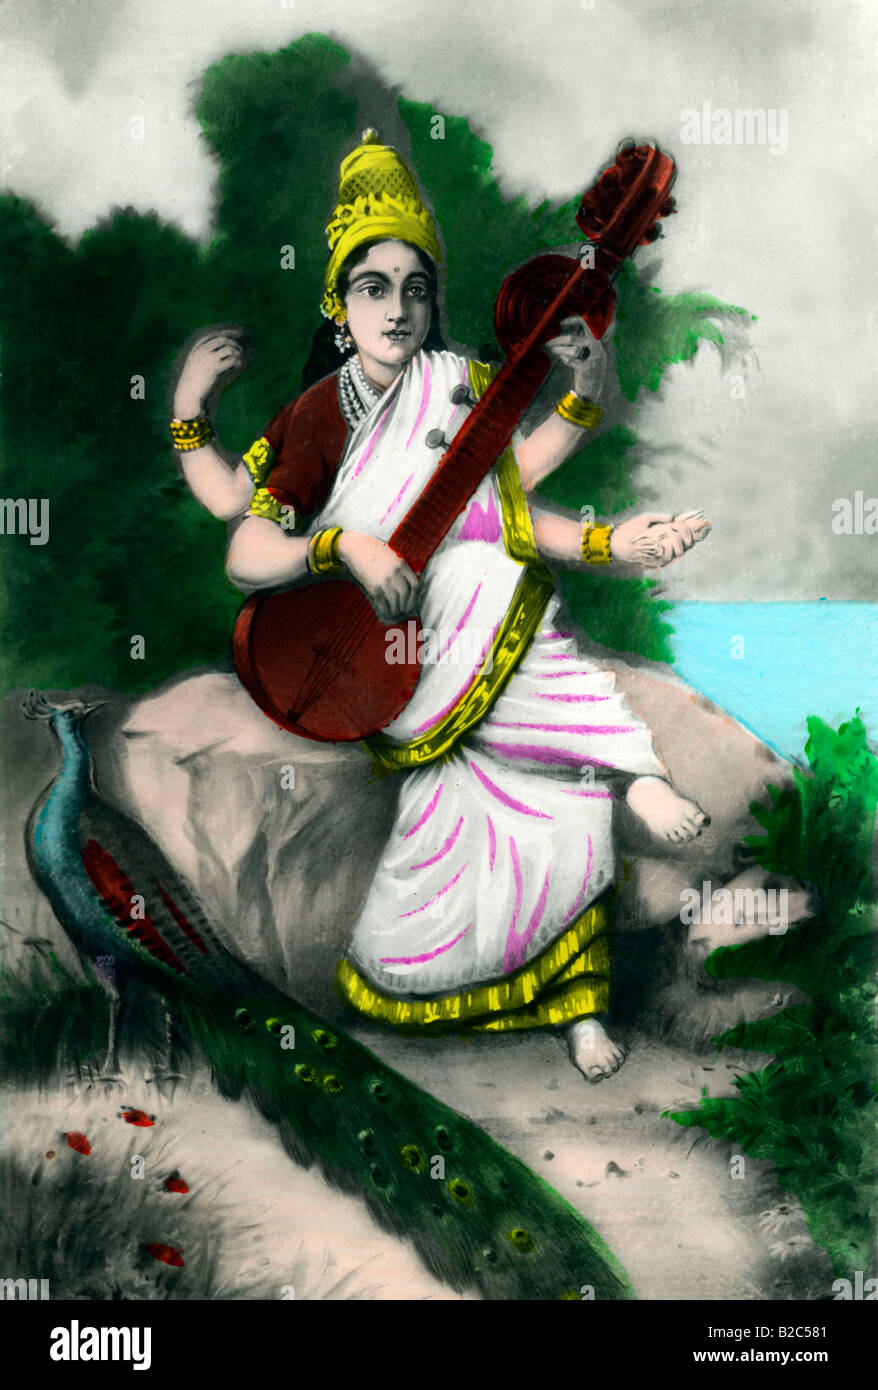 Imagen de Saraswati, diosa hindú, imagen histórica de alrededor de 1910 Foto de stock